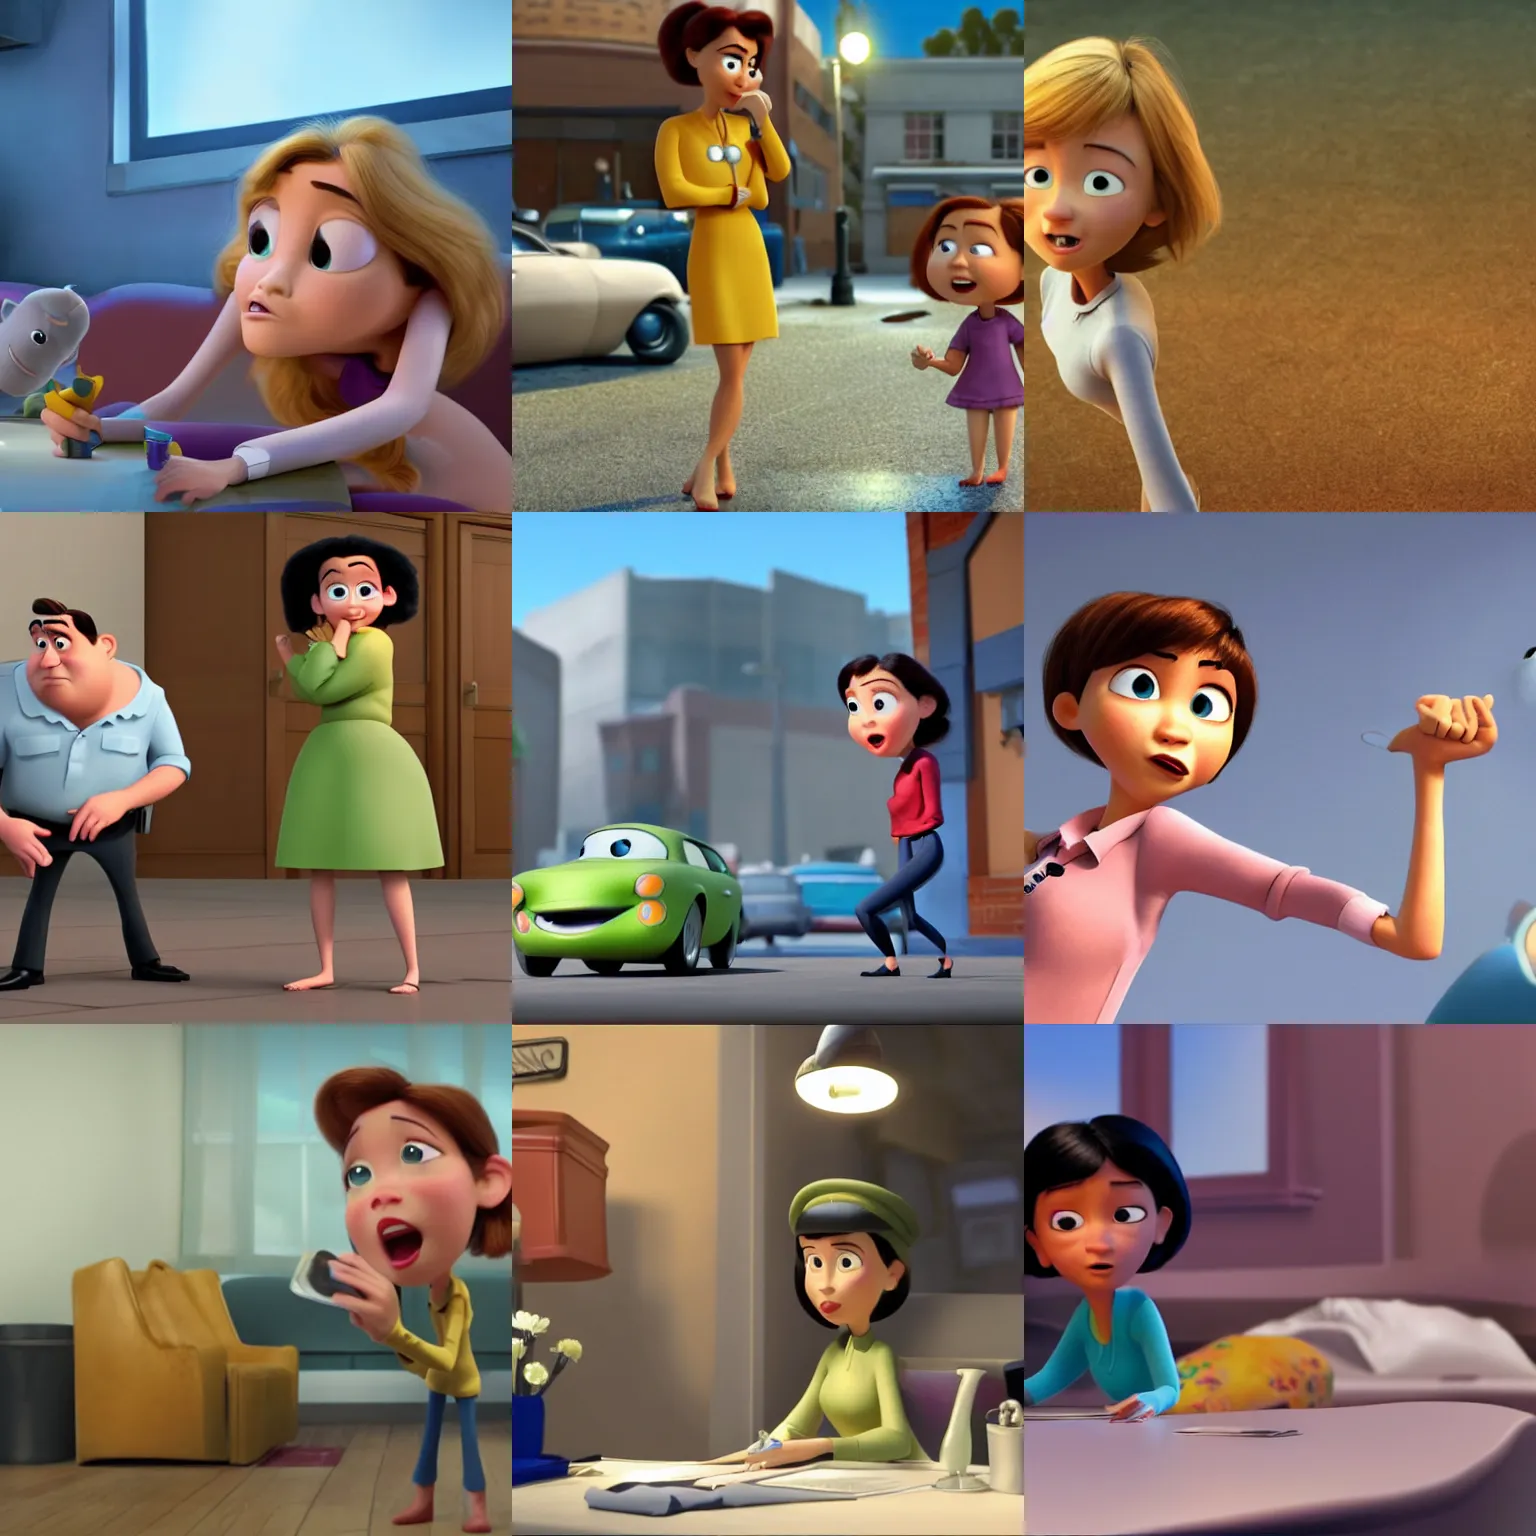 Prompt: animation still of a pixar movie, a female private investigator investigates a homicide